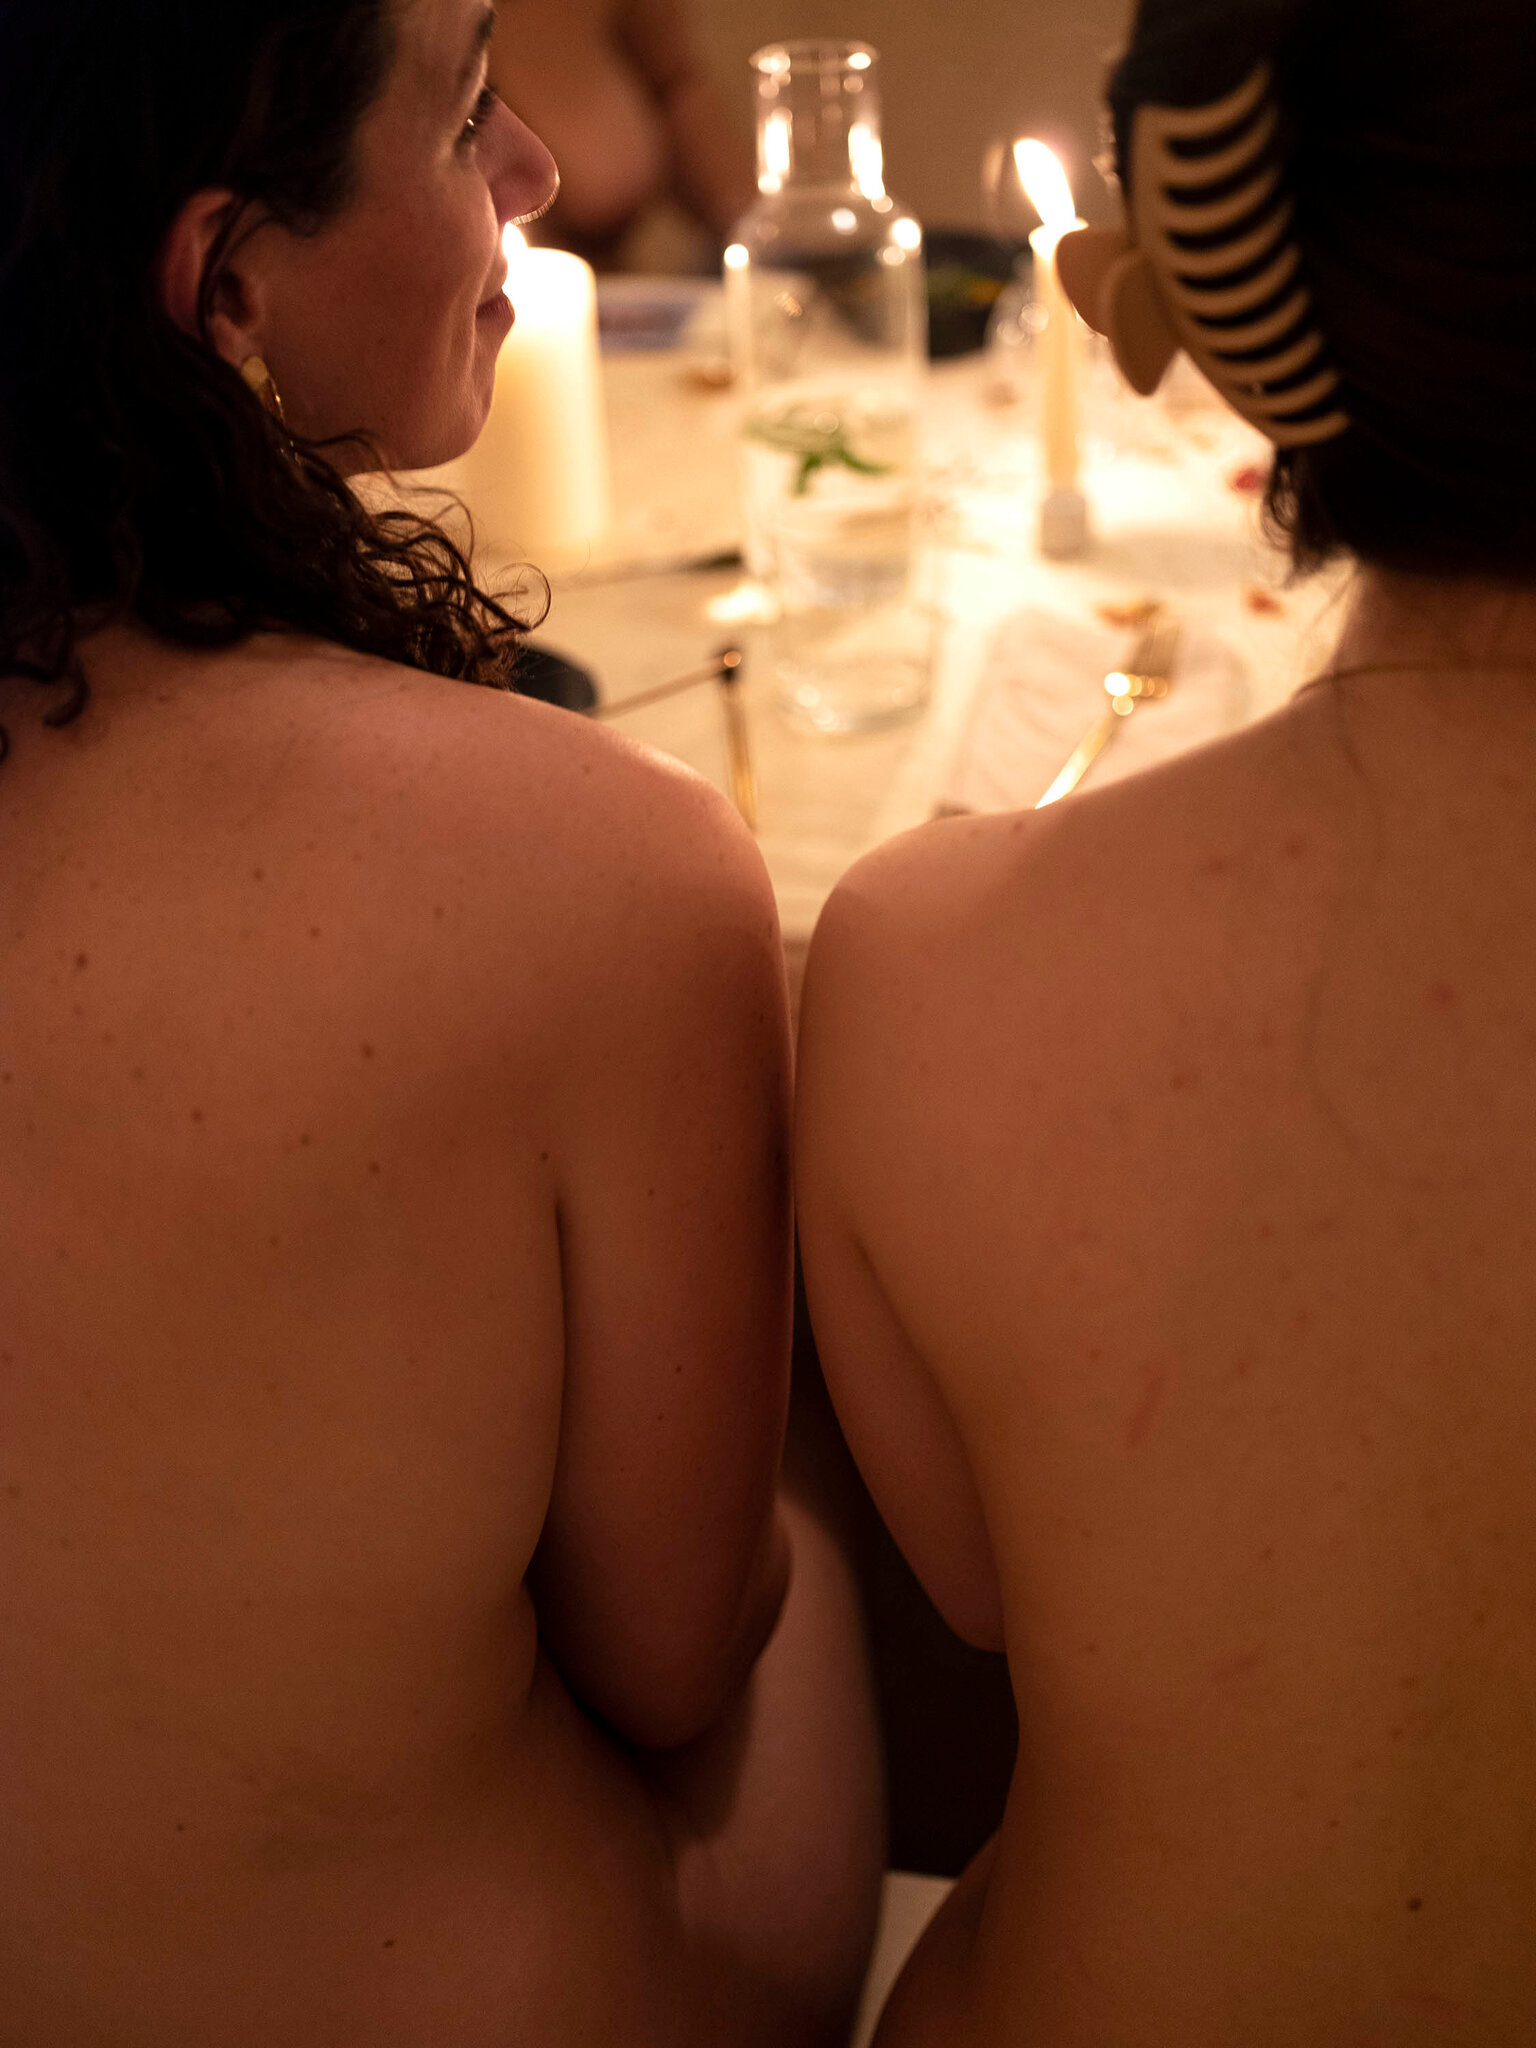 amber bond share nudist contest videos photos